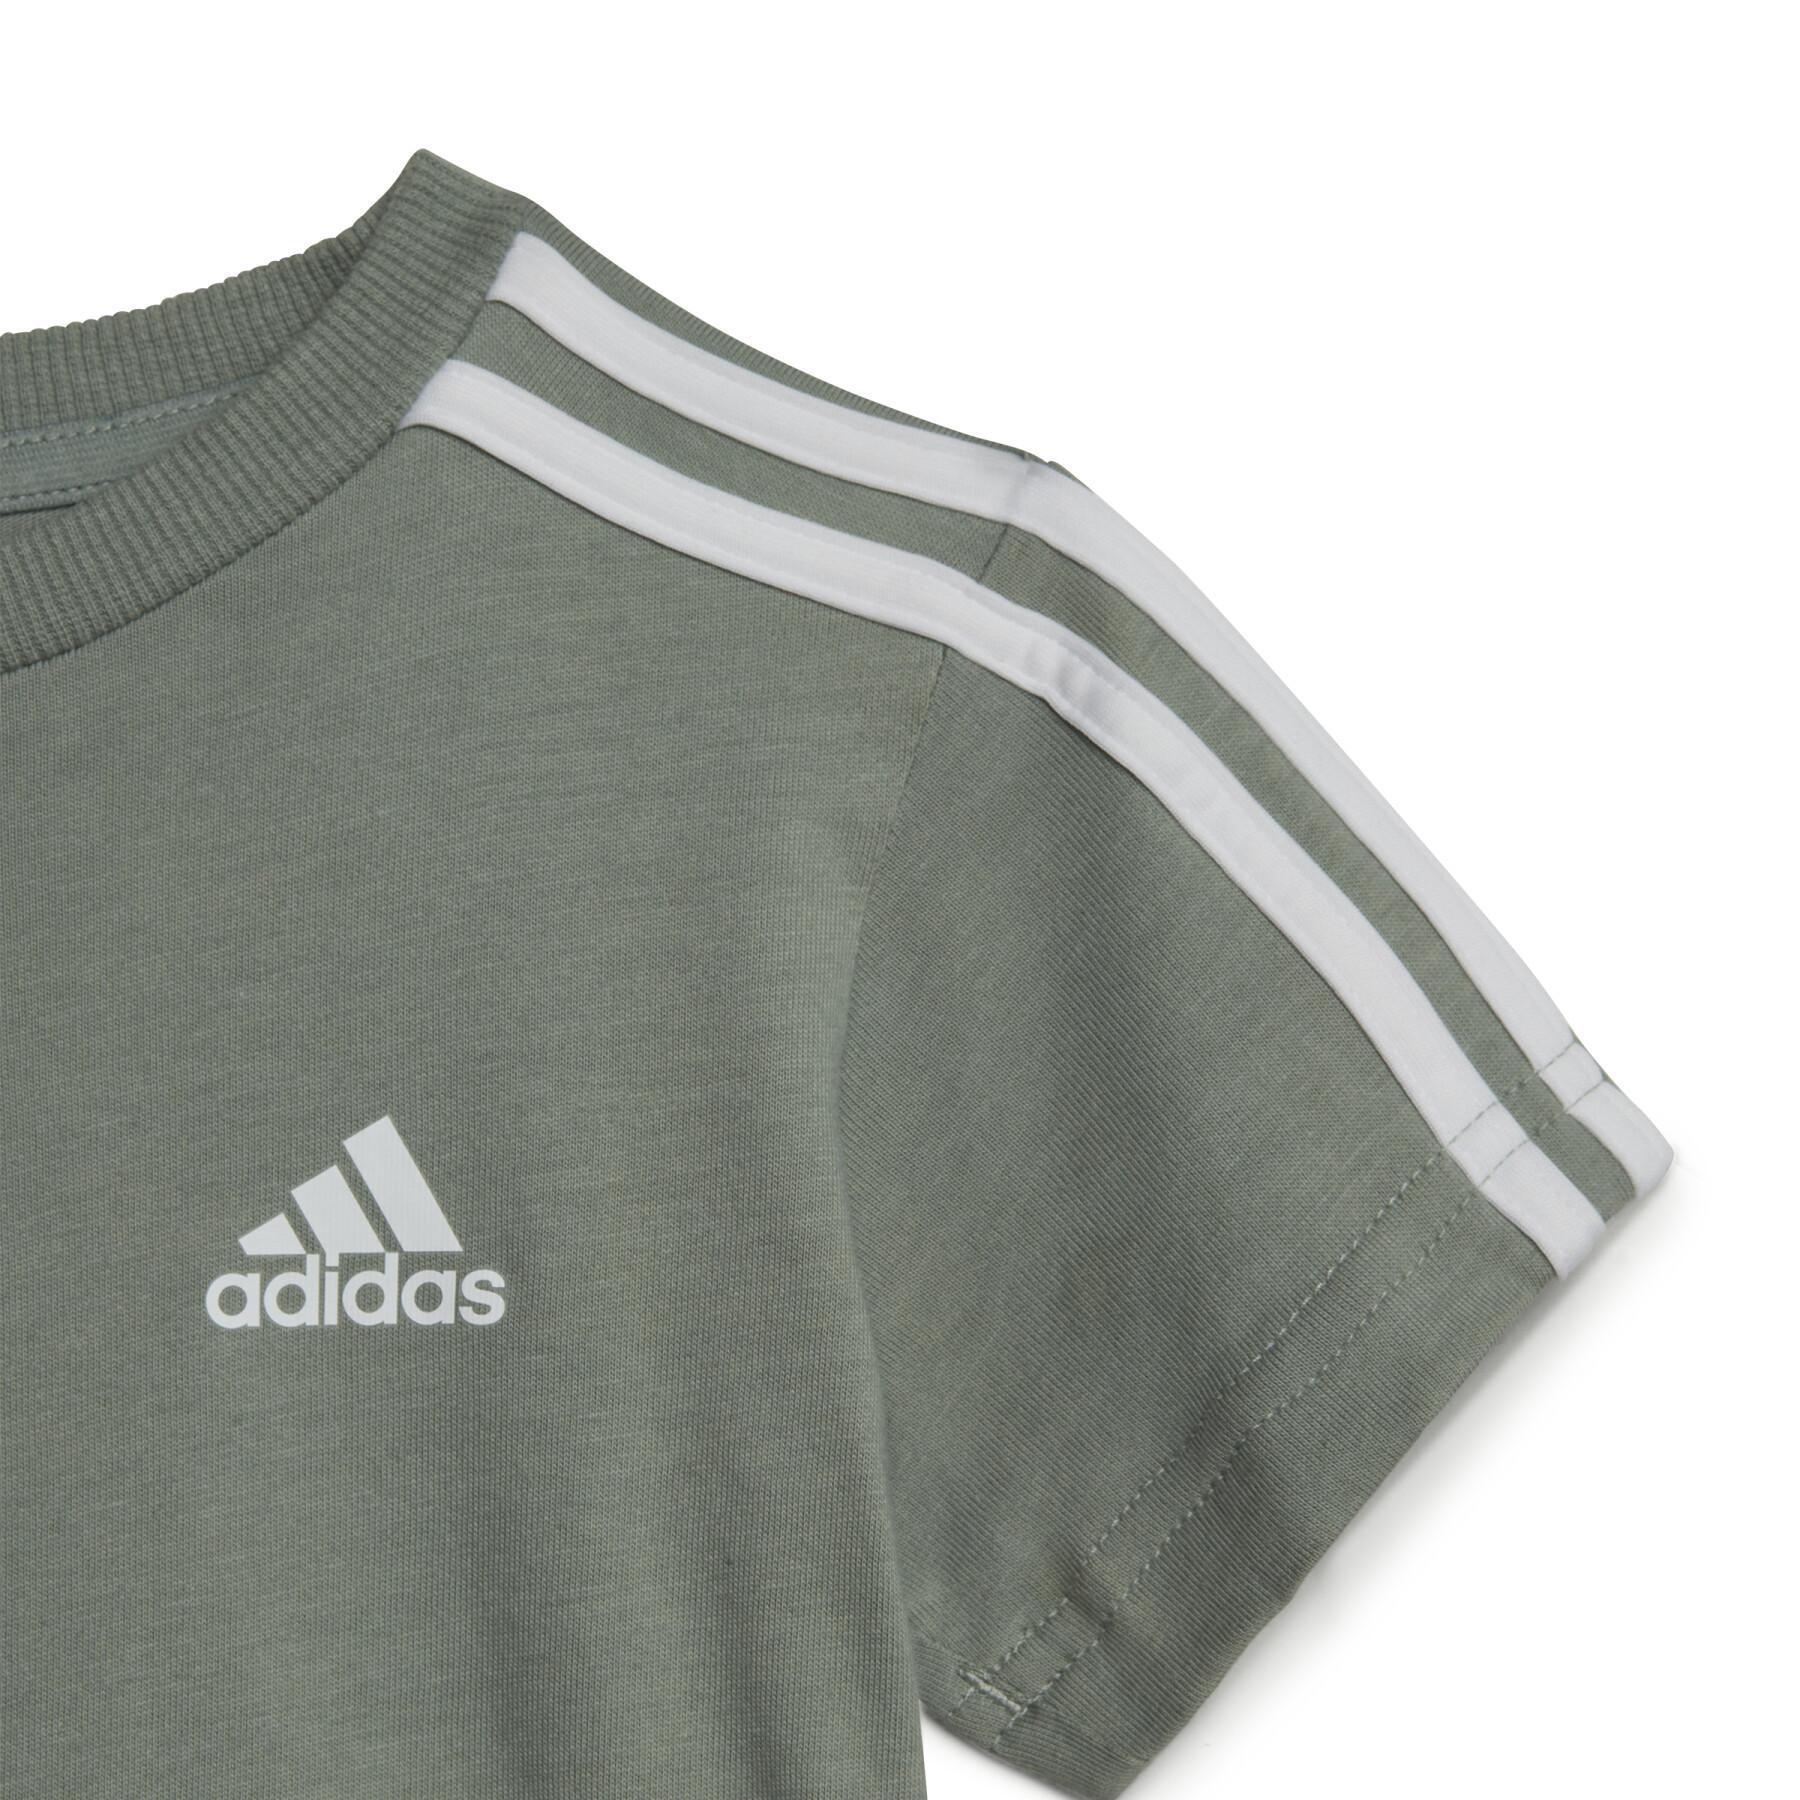 Ensemble t-shirt avec short bébé adidas Essentials Sport